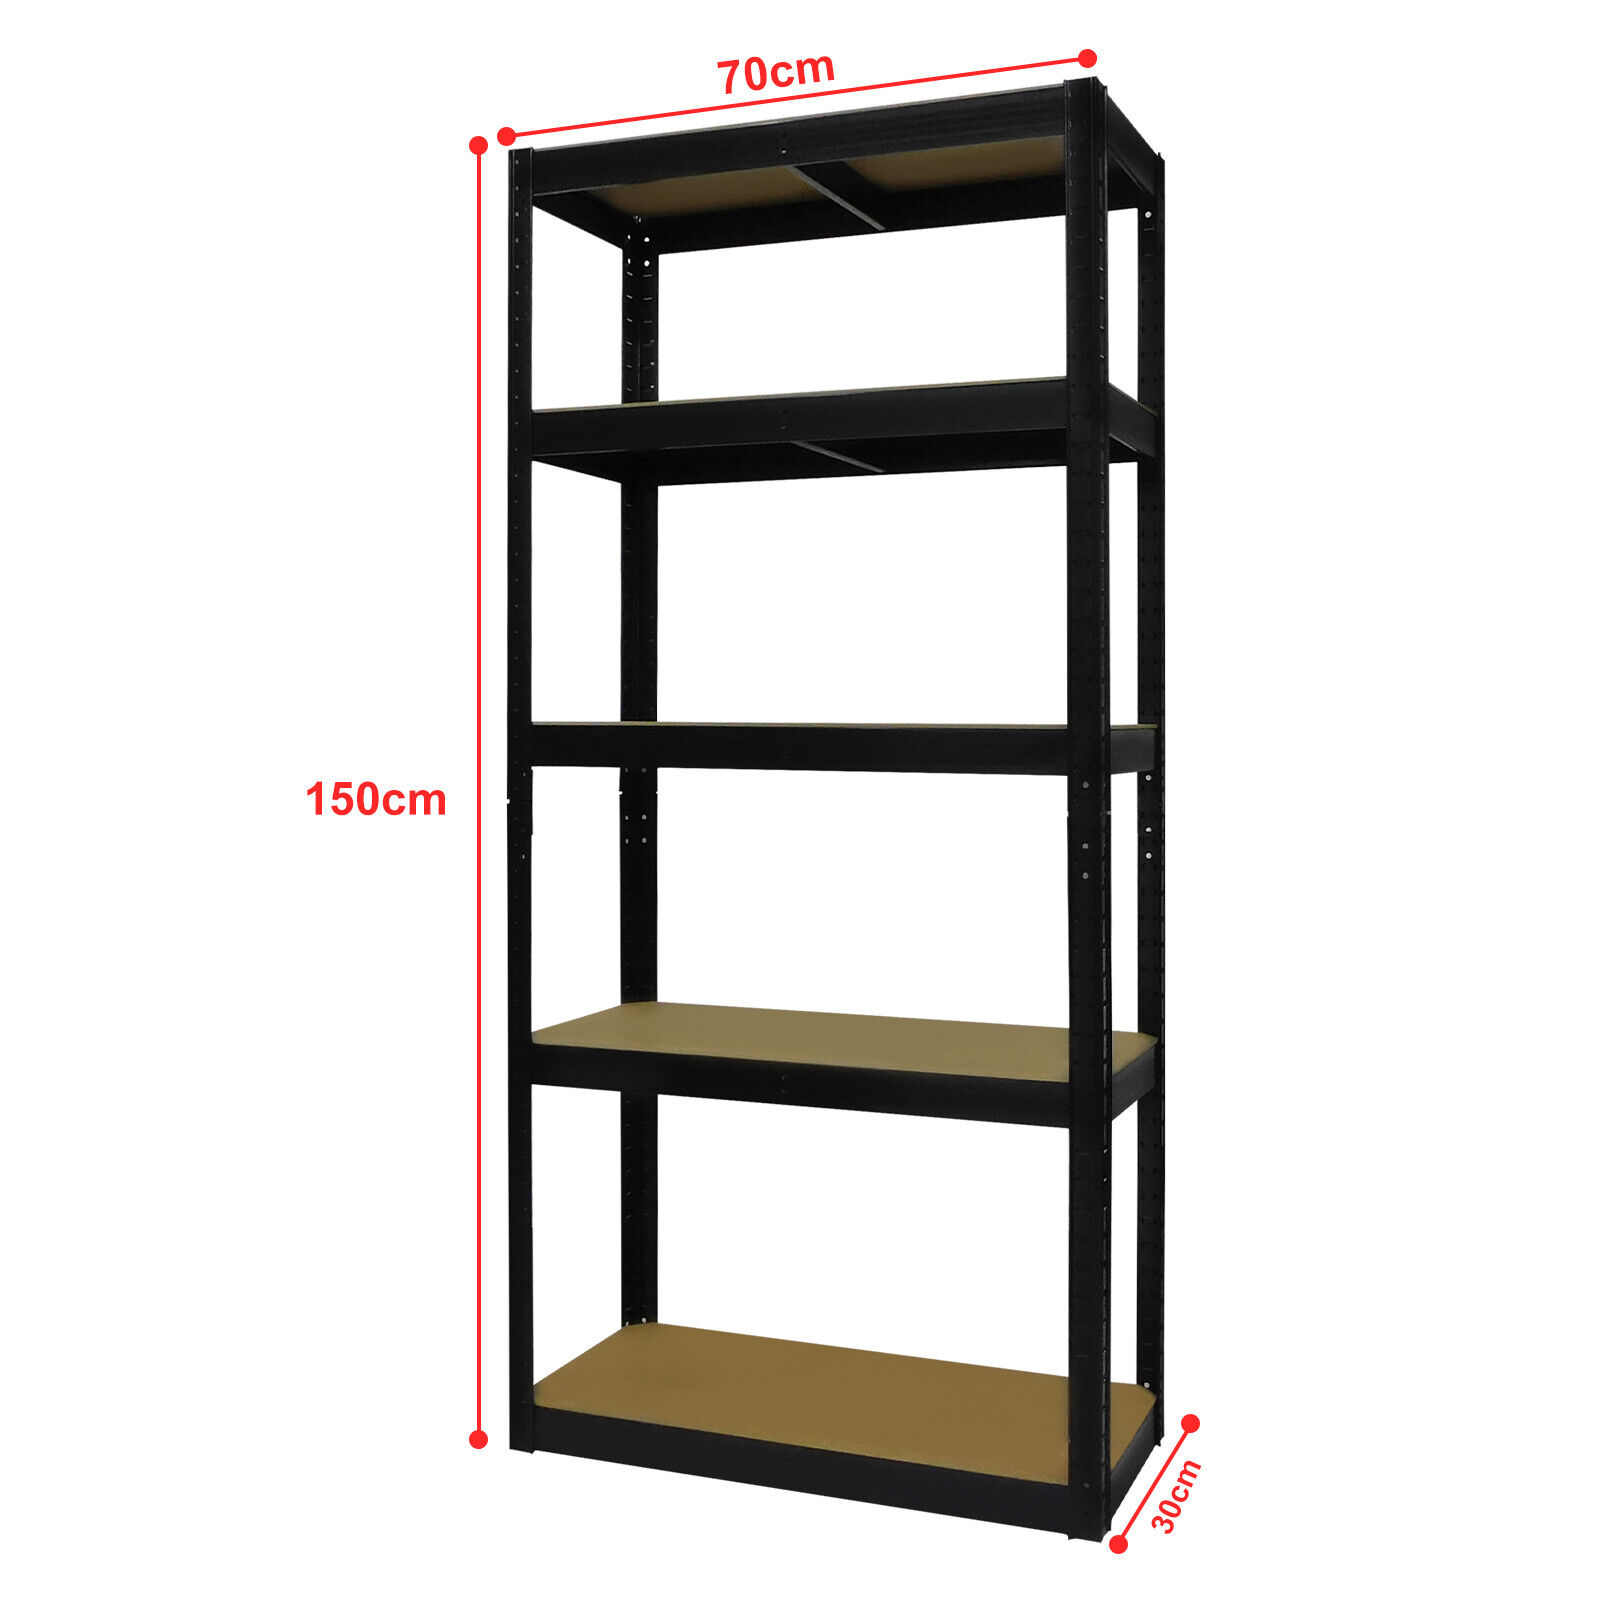 Adjustable 5-Tier Shelf Garage Shelving Unit Rack Storage Home Shop 150x70x30cm